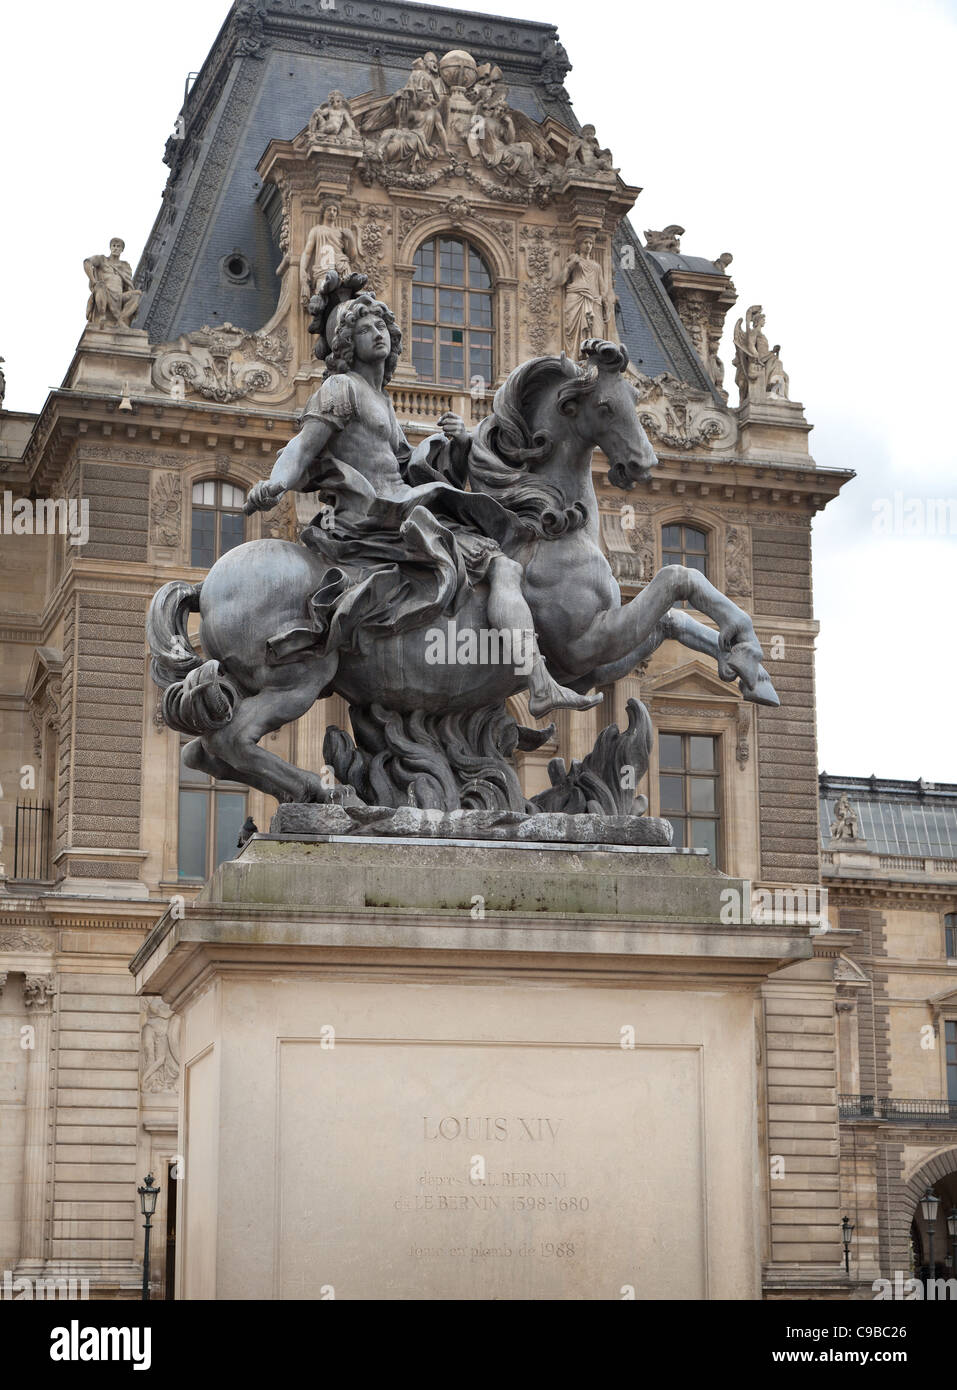 Louis XIV equestrian statue on plinth, The Louvre central courtyard, Paris, France Stock Photo